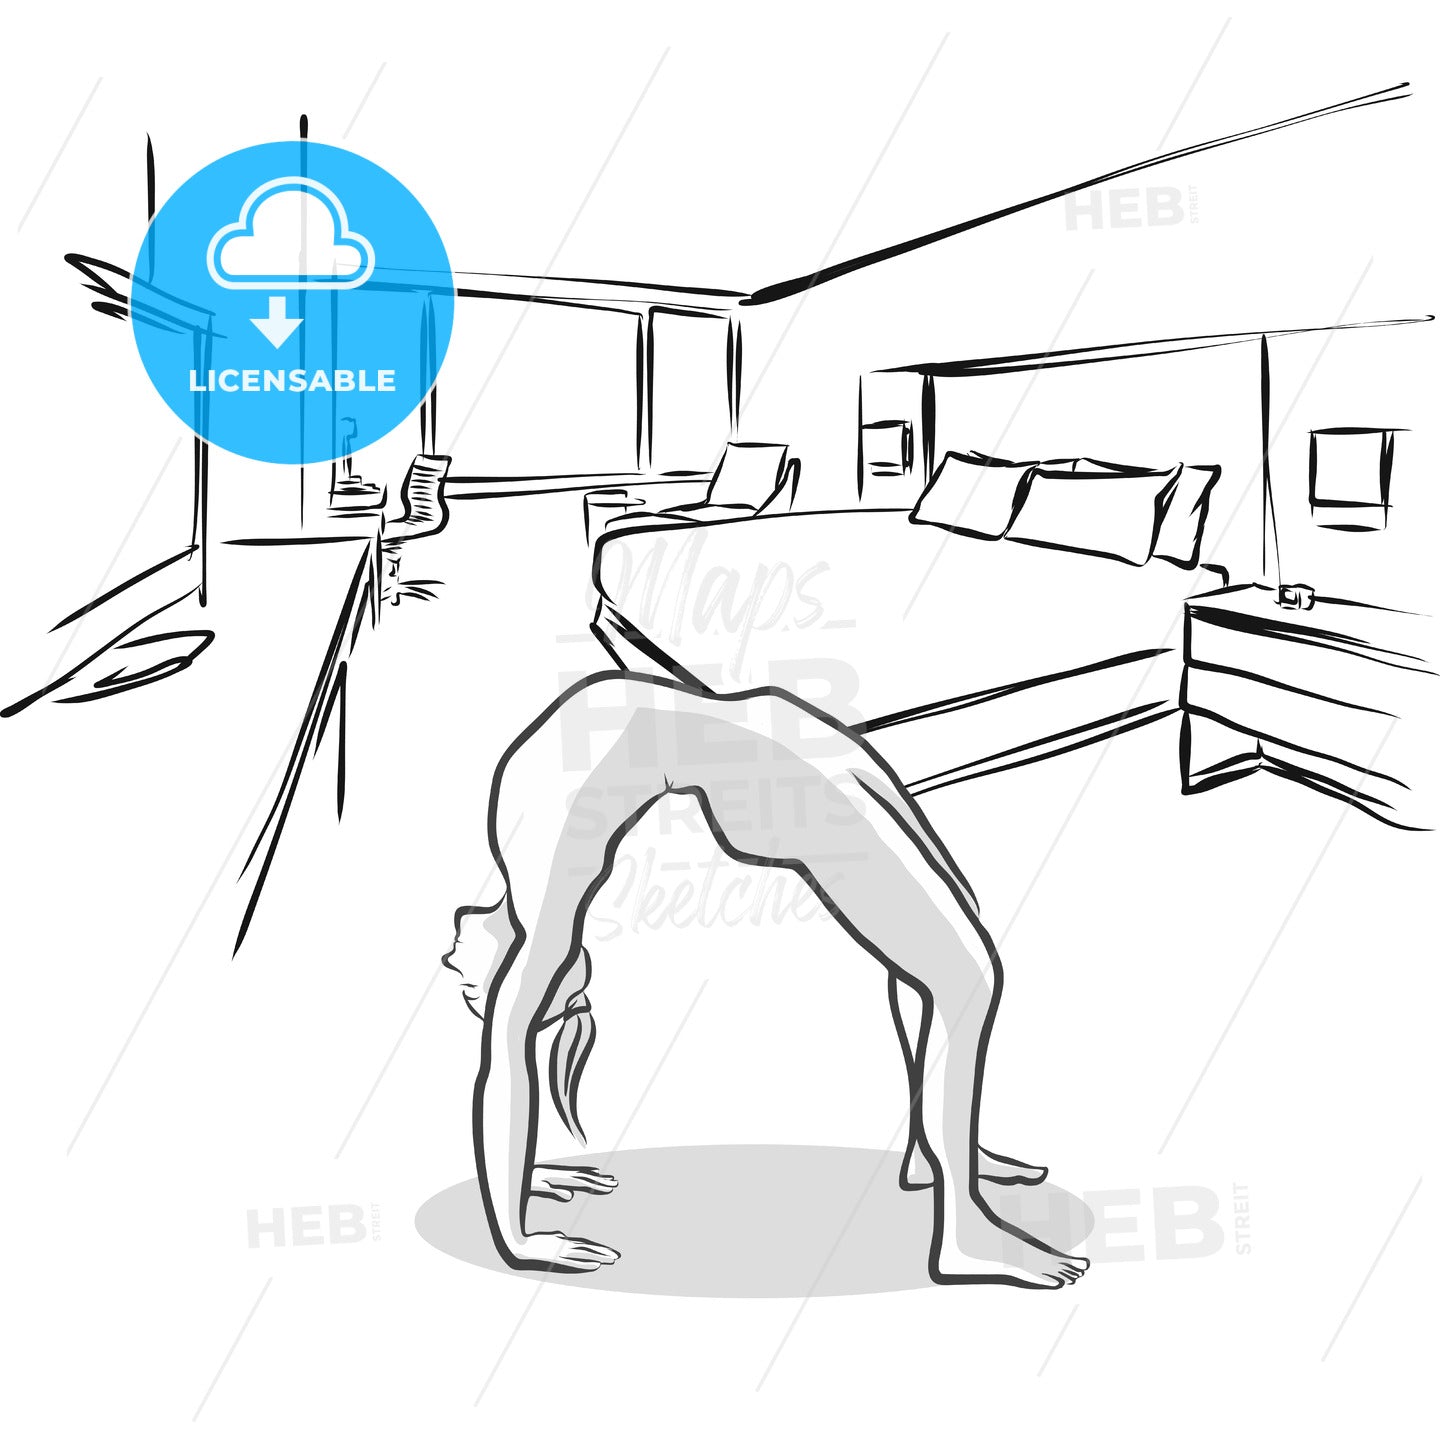 Yoga Bridge Pose in Hotel Room – instant download